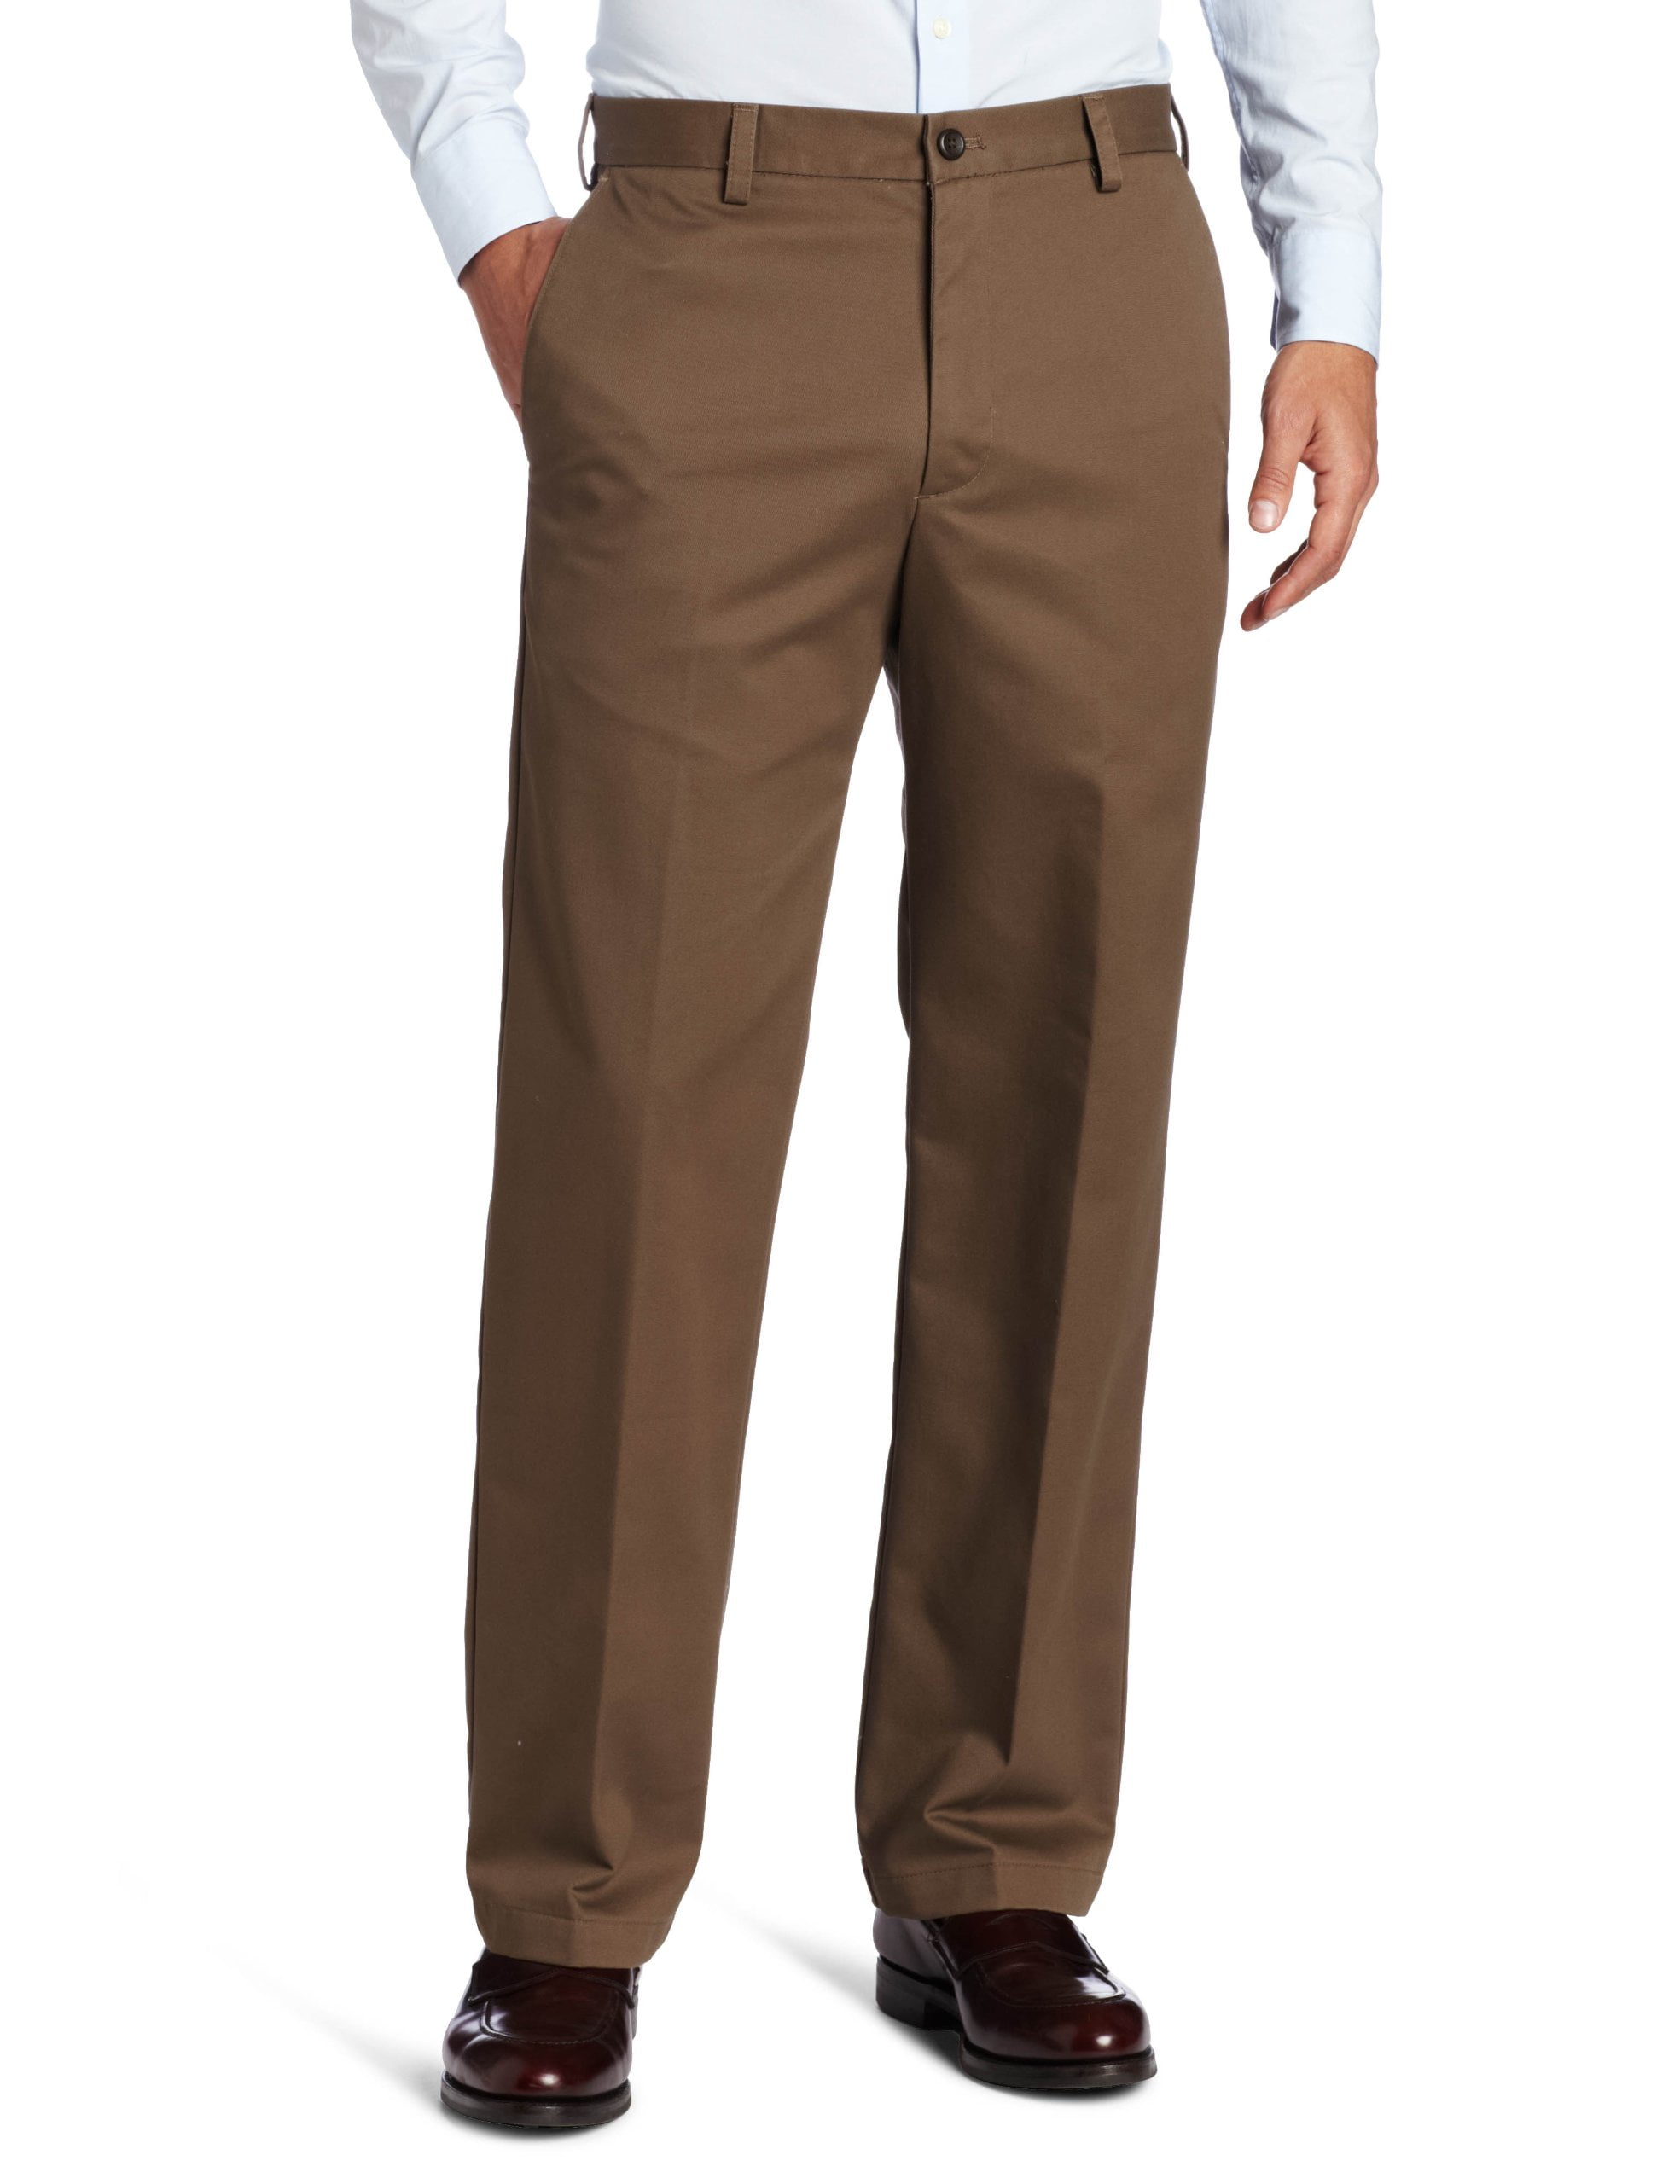 IZOD Men's Straight Fit Flat Front 4 Pocket Wrinkle Resistant Chino Khaki Pants 